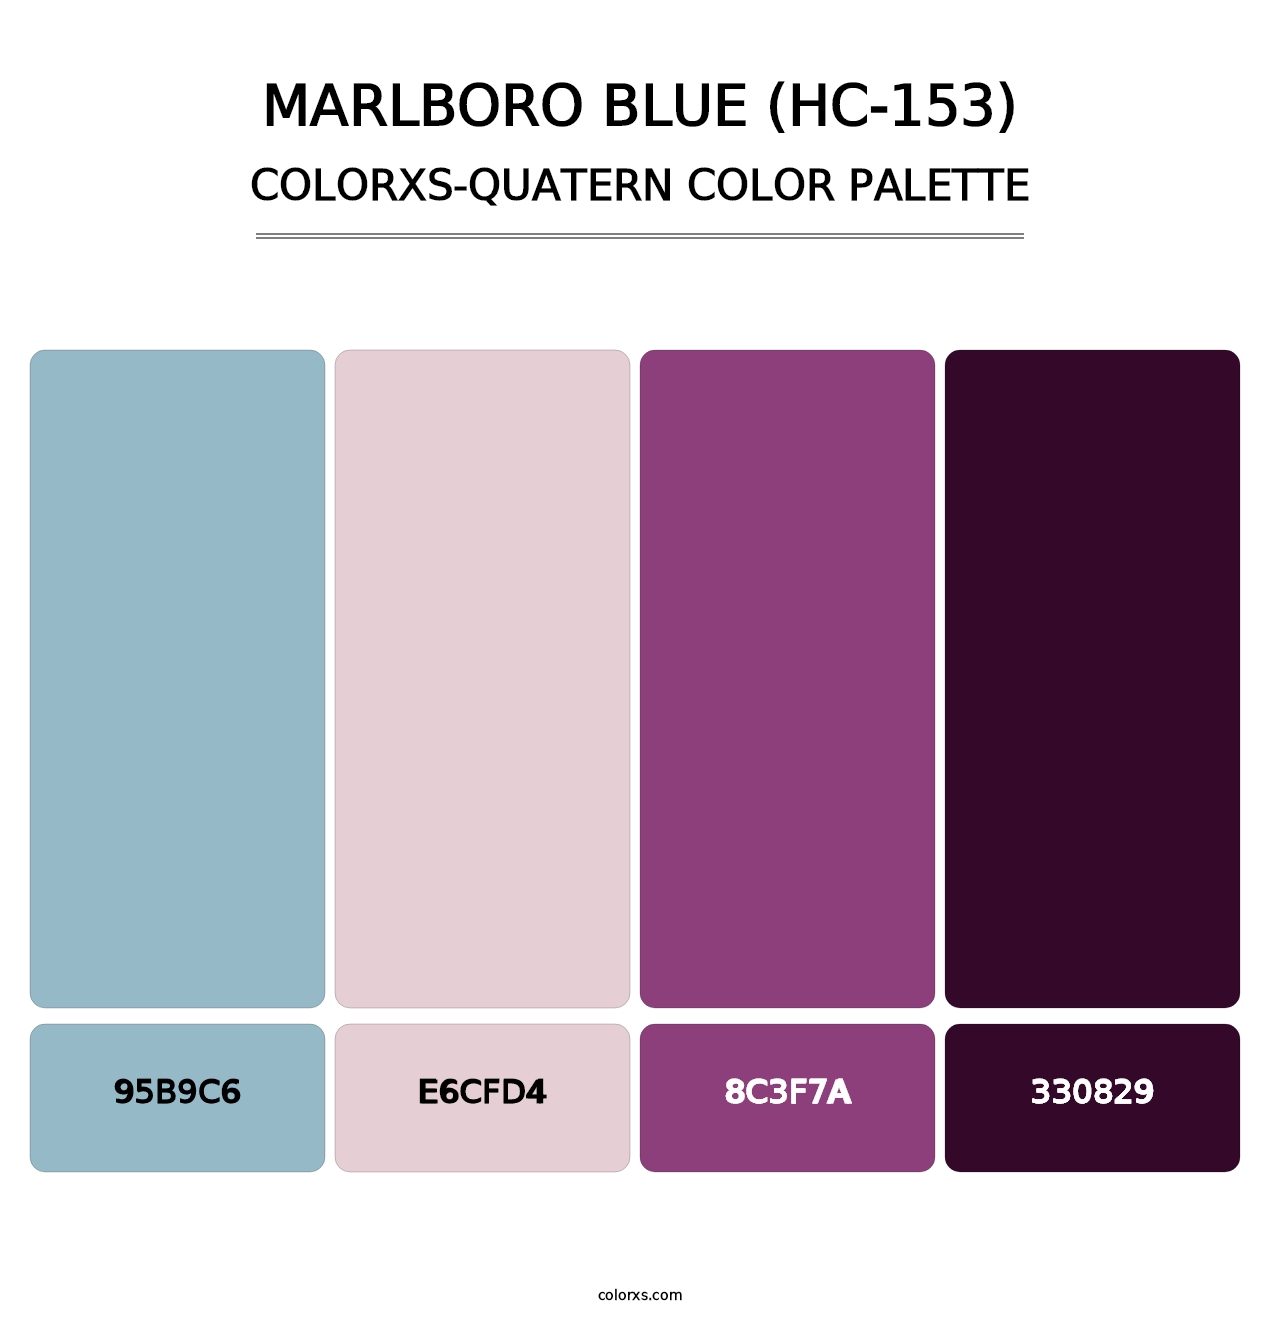 Marlboro Blue (HC-153) - Colorxs Quatern Palette